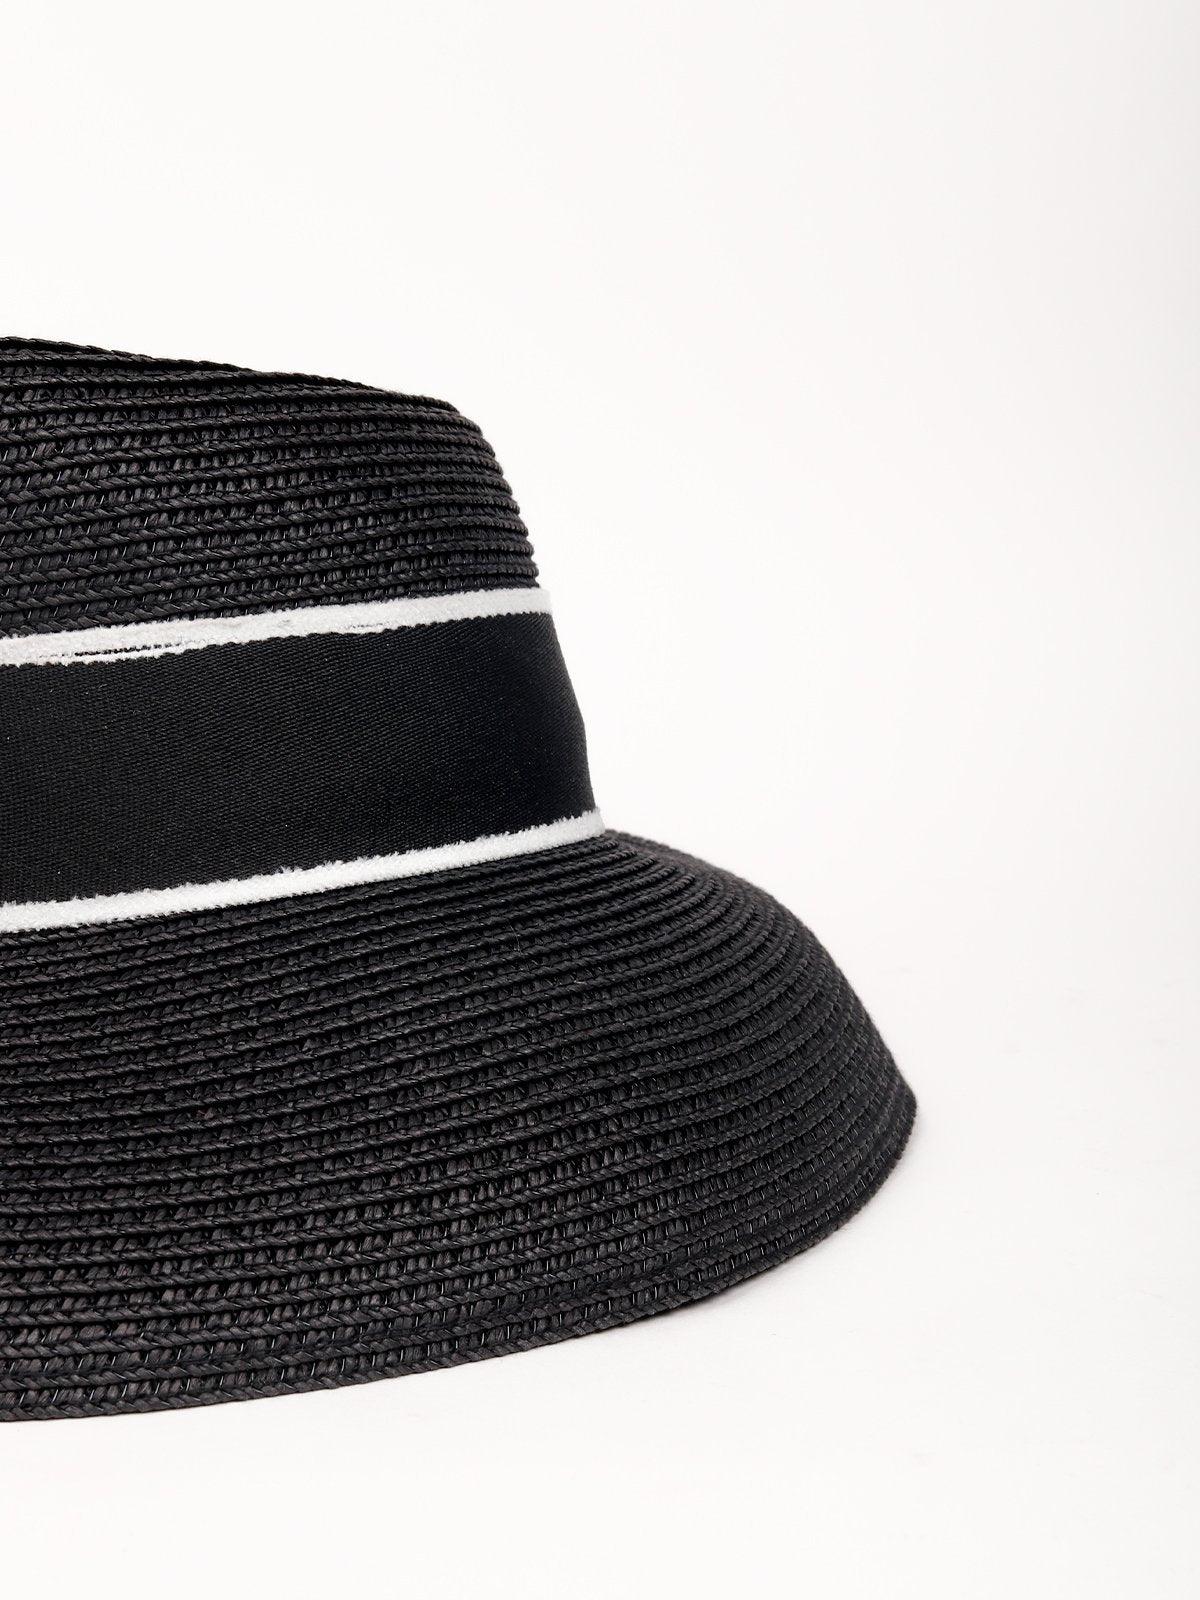 Classic Essential Black Fedora Hat - Odette